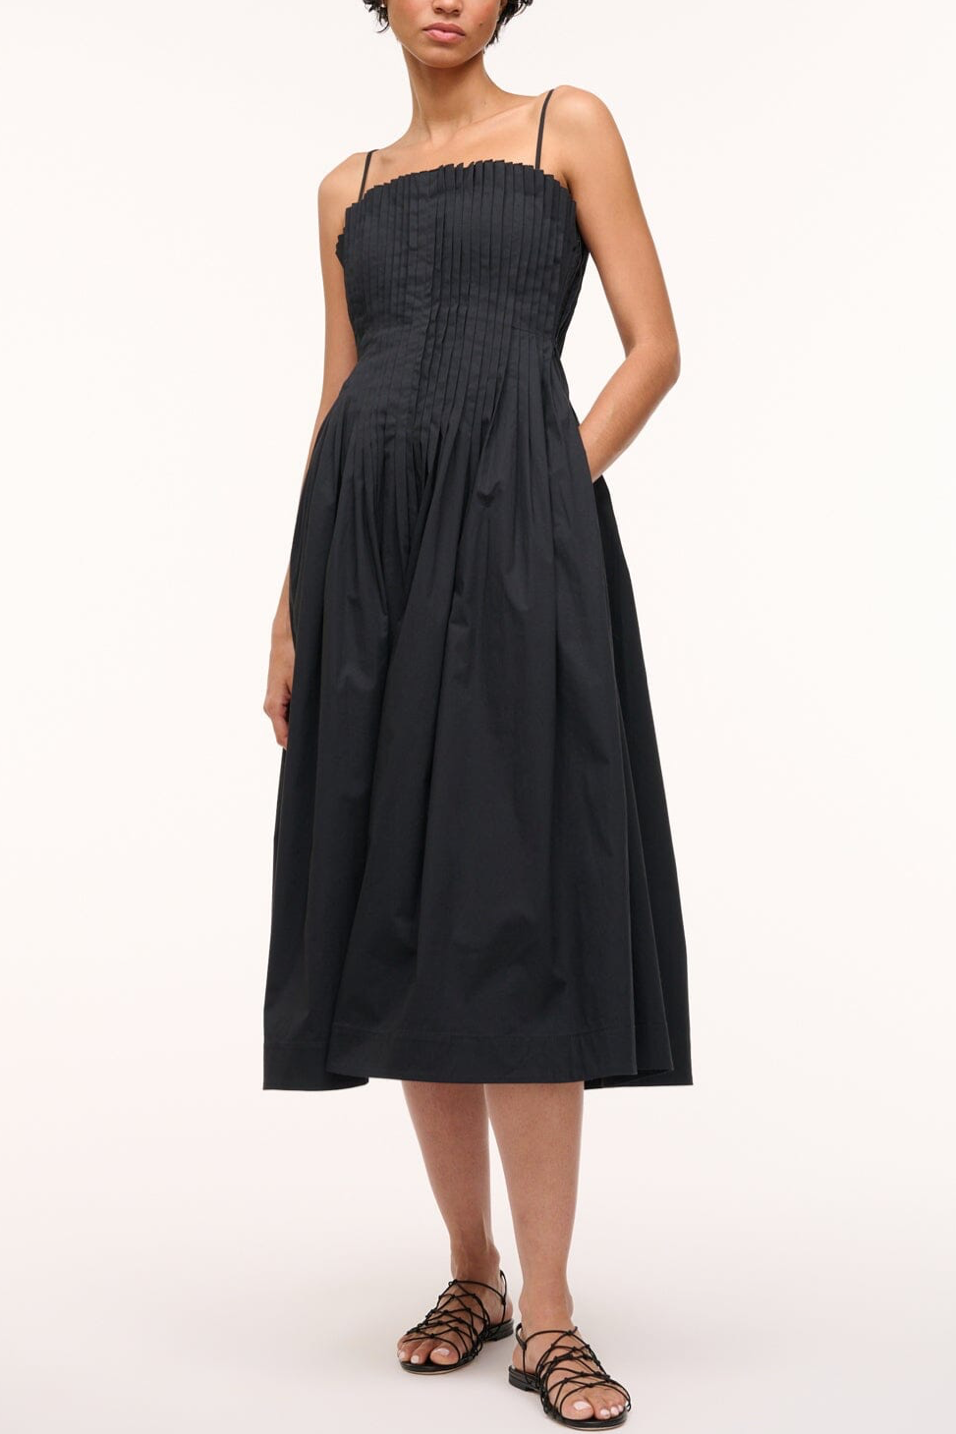 Image of model wearing Staud Midi bella dress in black